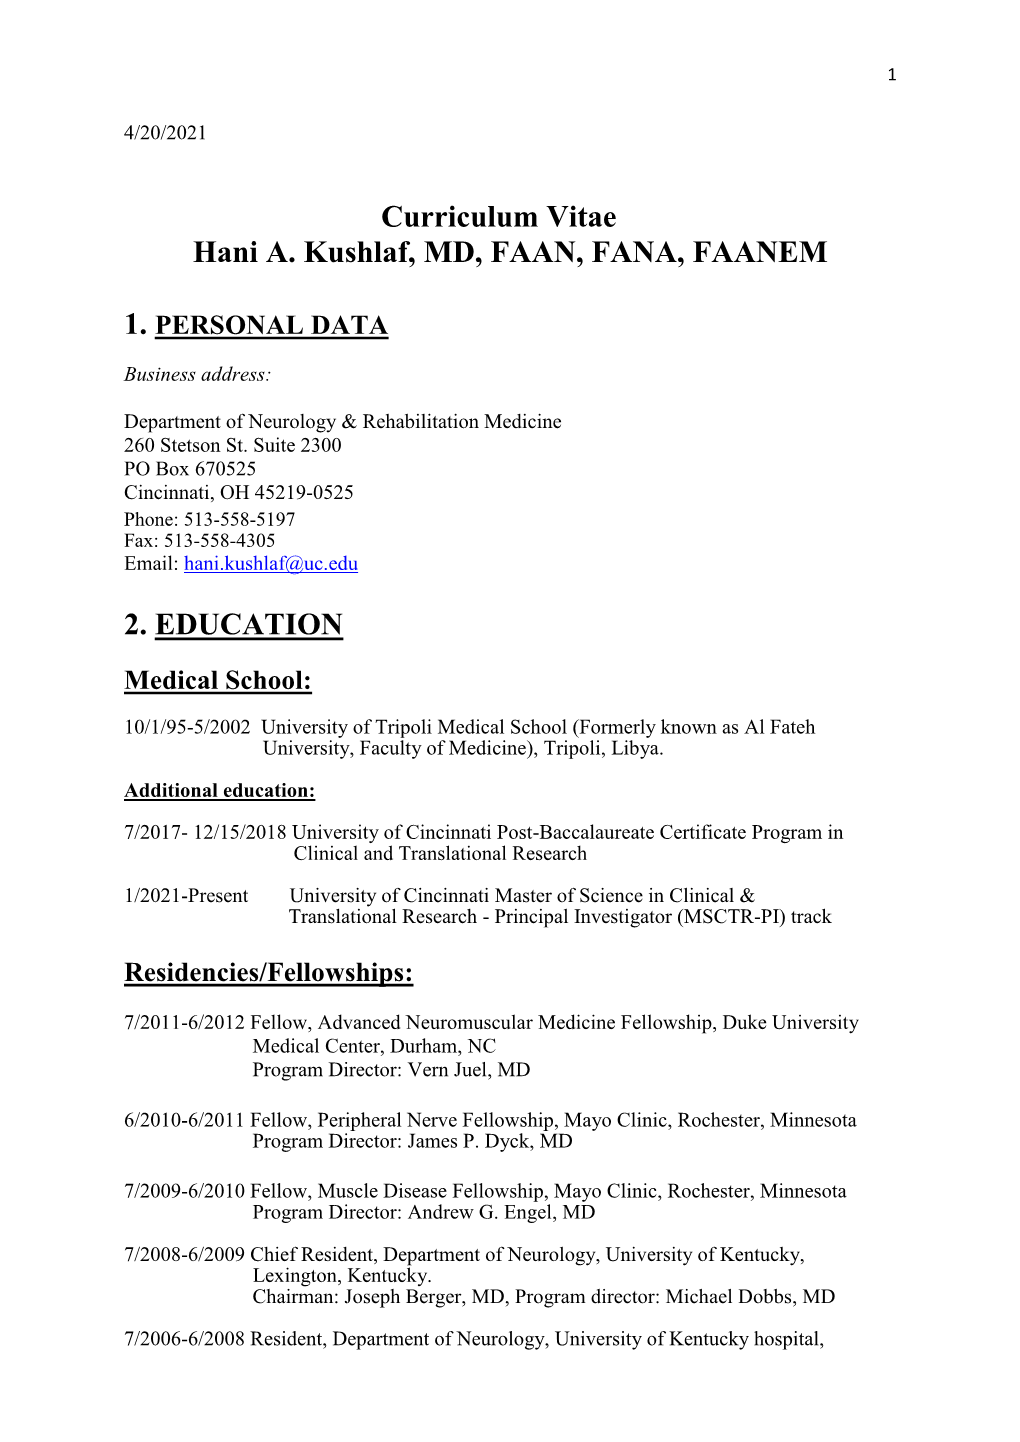 Curriculum Vitae Hani A. Kushlaf, MD, FAAN, FANA, FAANEM 2